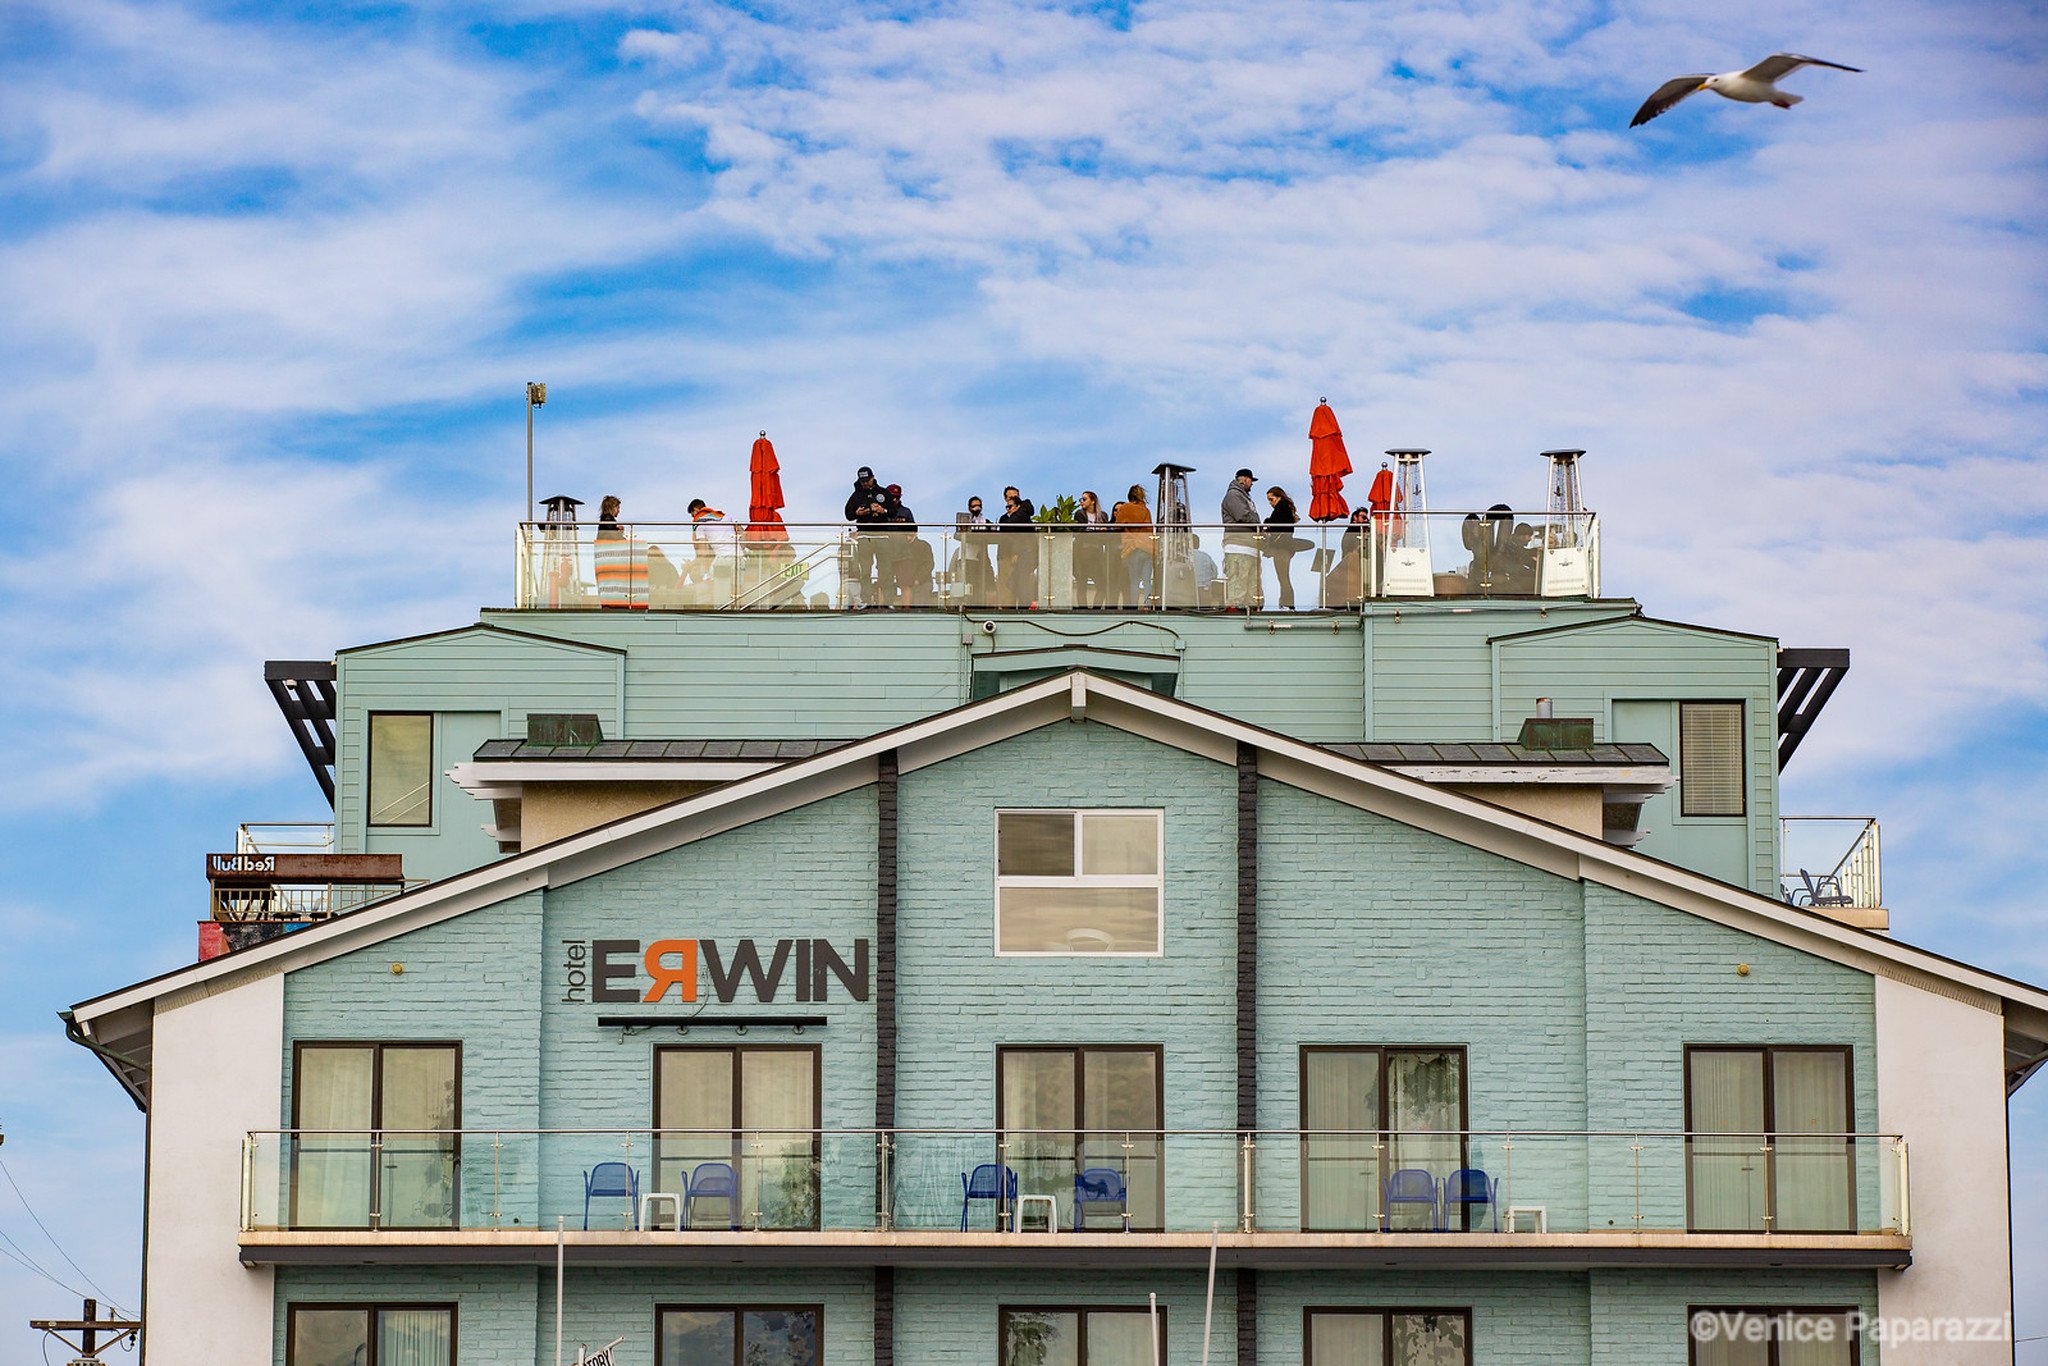 Hotel Erwin.jpg